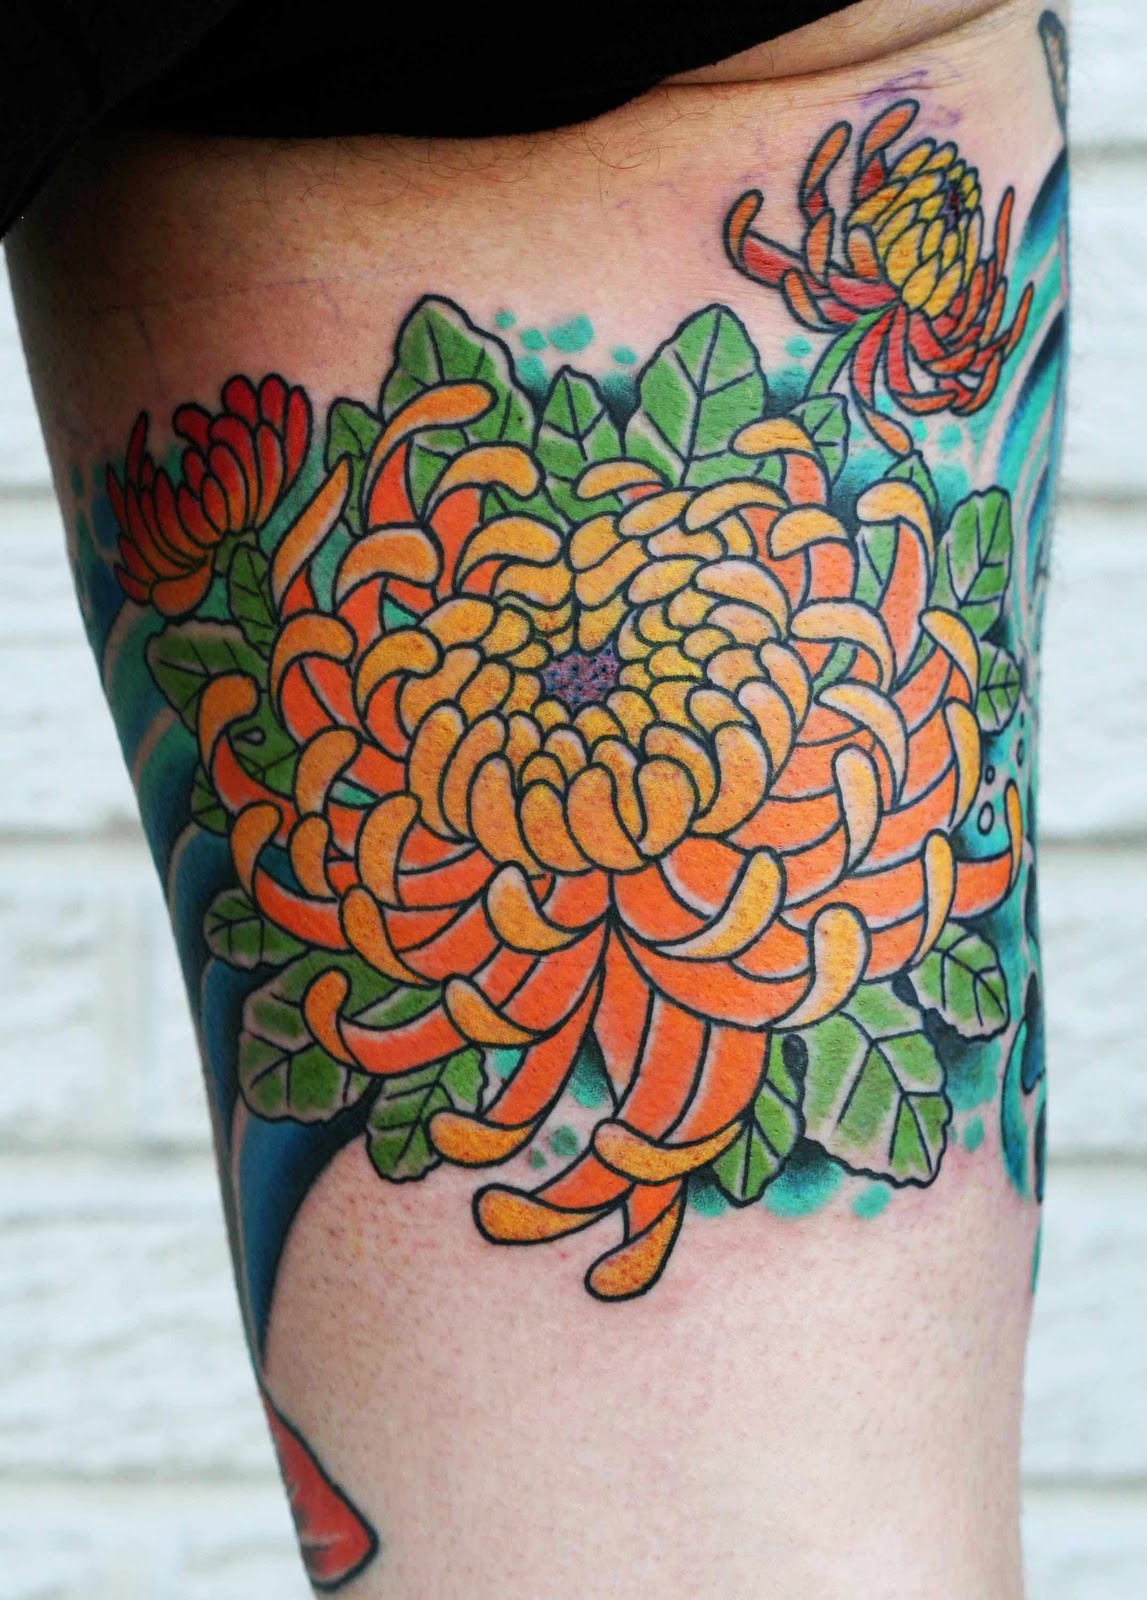 http://4.bp.blogspot.com/-Nq7SrY6FtUo/TvJ8CB1KJBI/AAAAAAAAABU/fw-6ykh4rtE/s1600/Chrysanthemum+Tattoo+Design+And+Symbols+on+arm.jpg